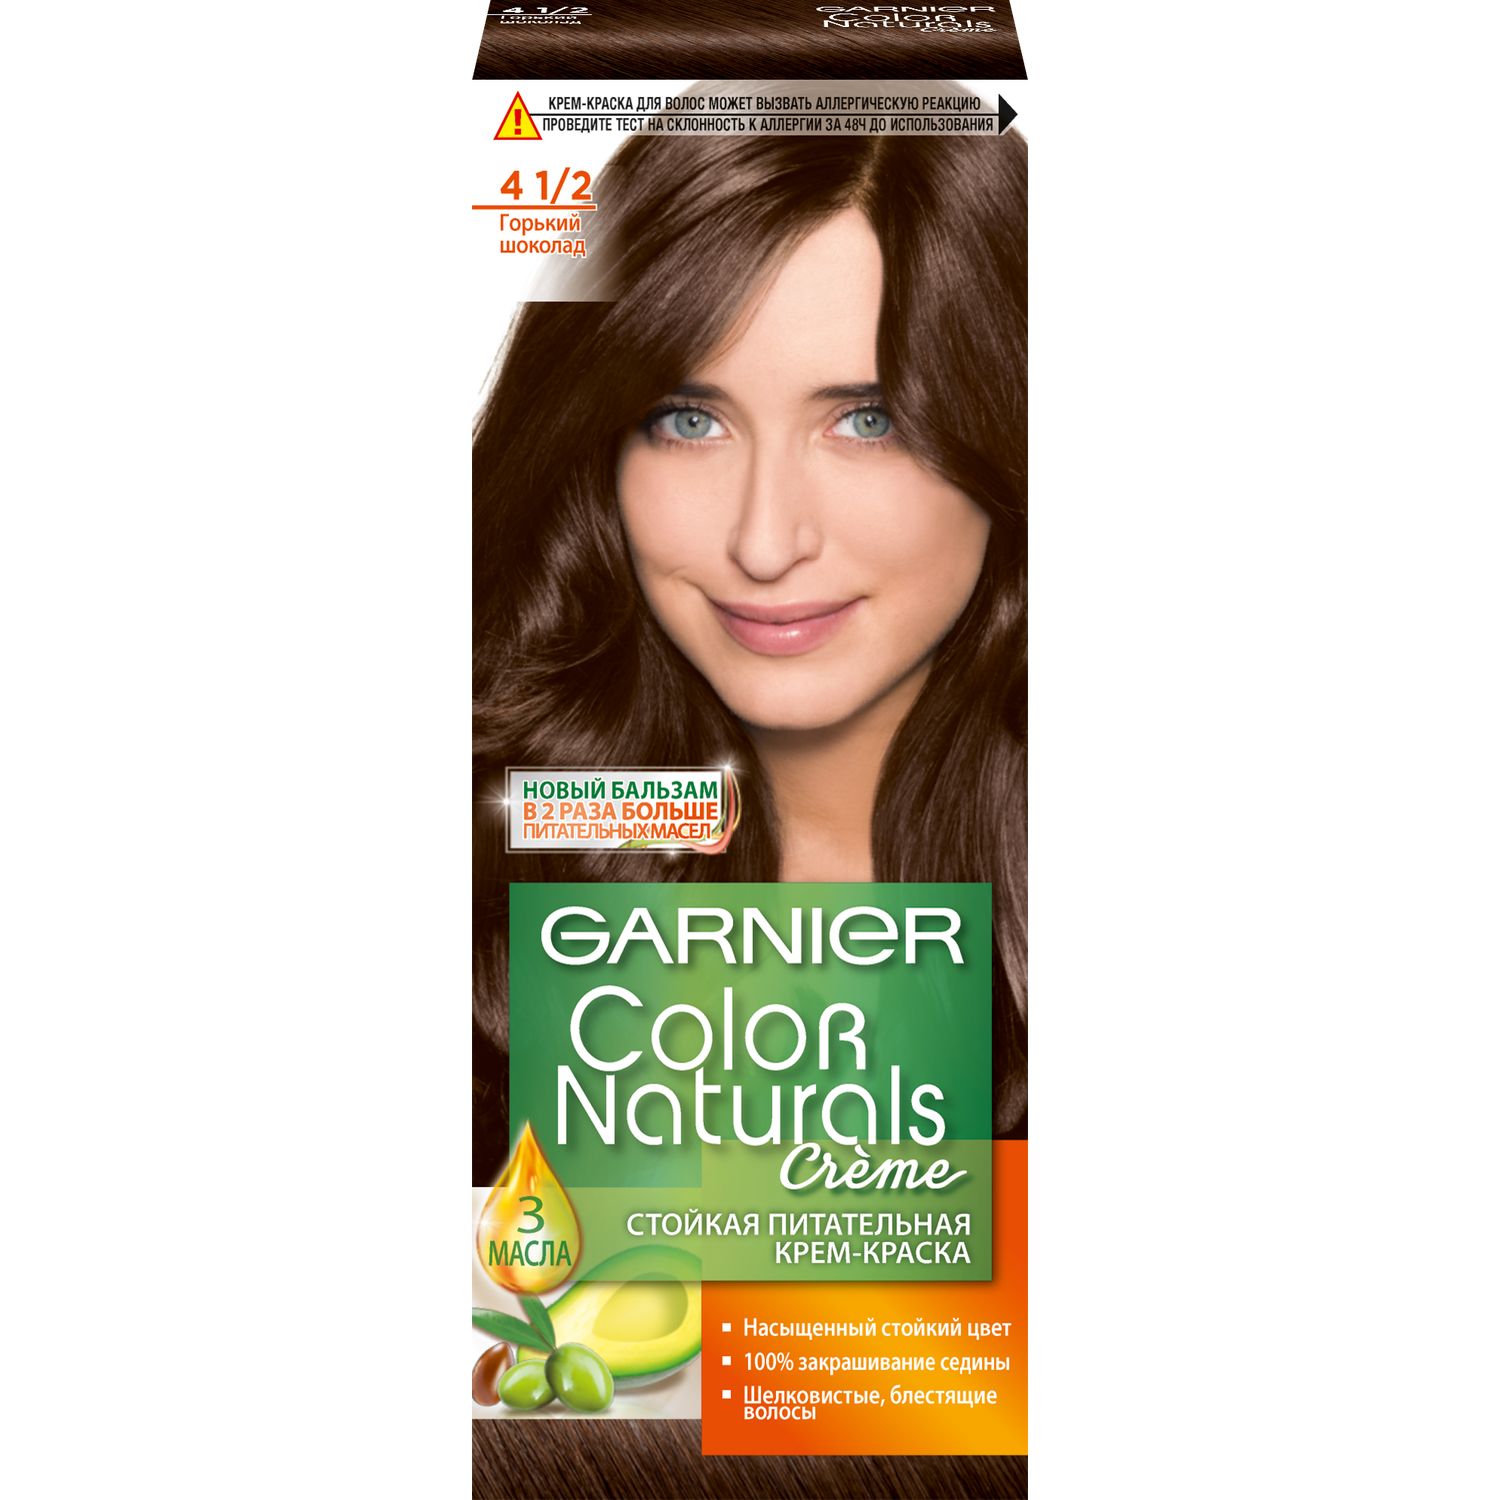 Garnier Color naturals краска для волос 41/2 Горький шоколад